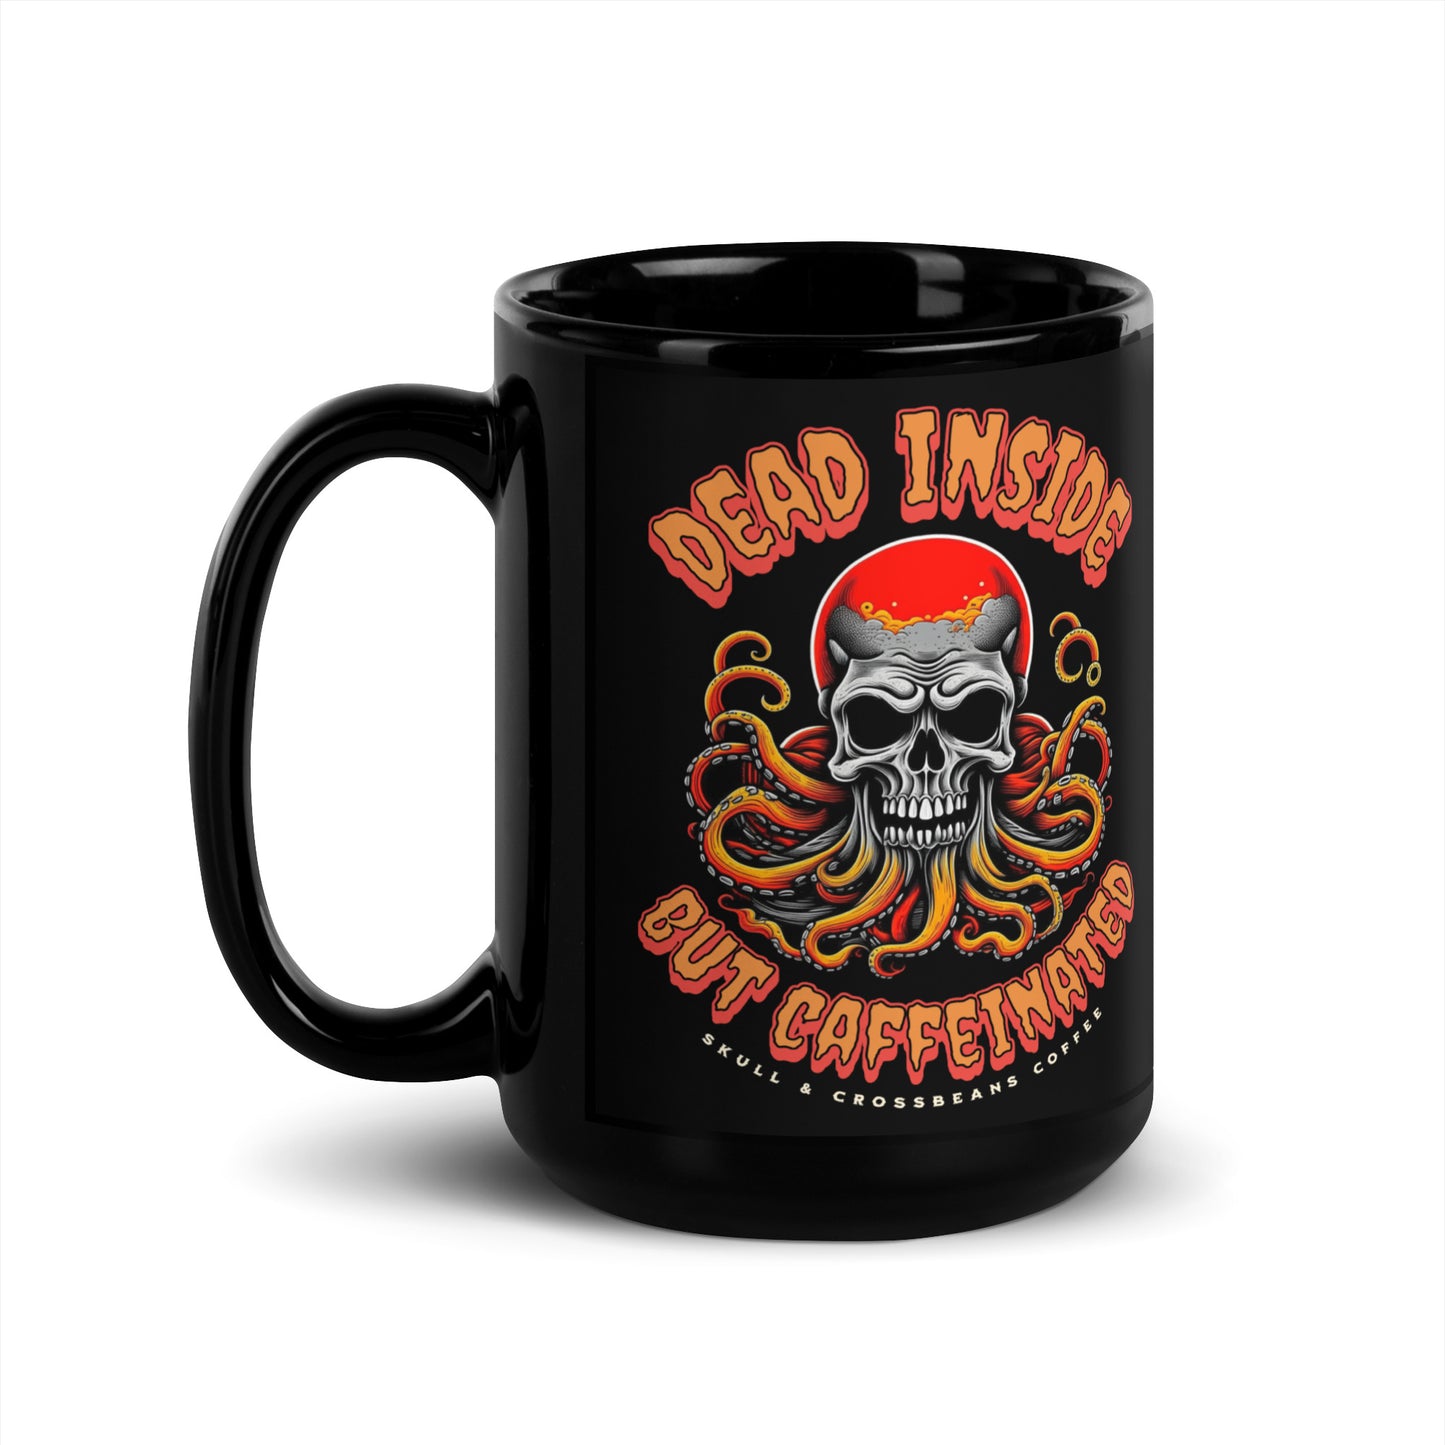 Dead Inside but Caffeinated Black Glossy Mug